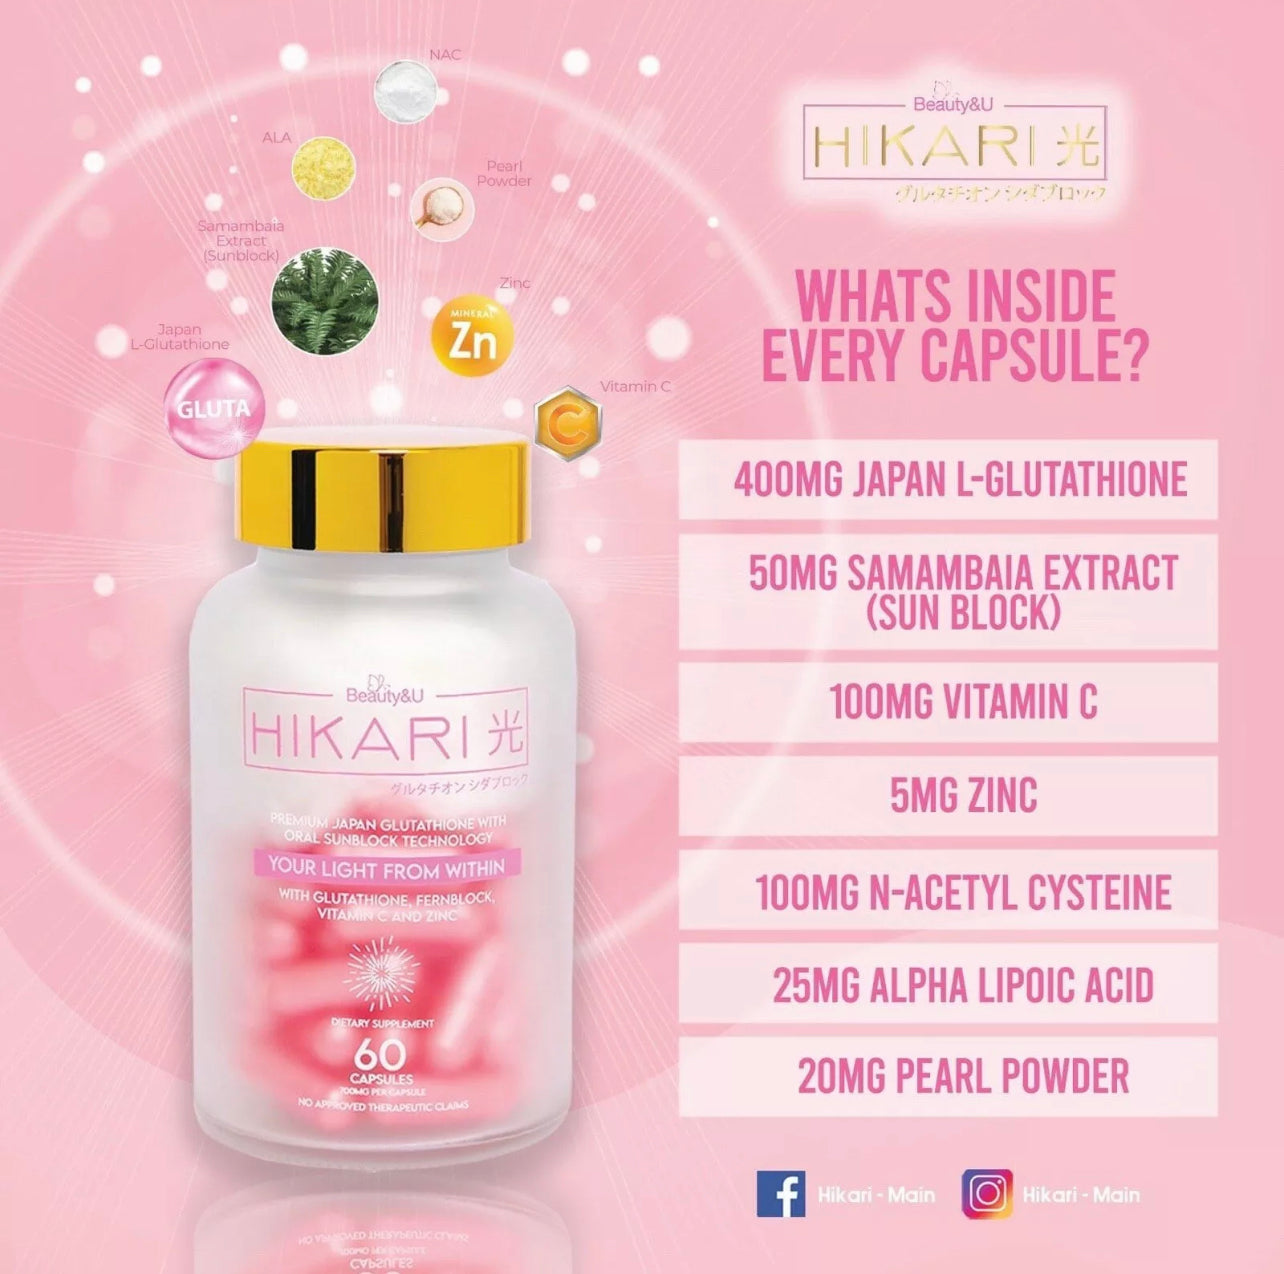 Hikari Glutathione Capsule | Japan Premium Glutathione With Oral Sunblock Technology -60caps - Shop Essential Skin Care Products online | Natural Organic skin care products | ROSYSKIN ESSENTI